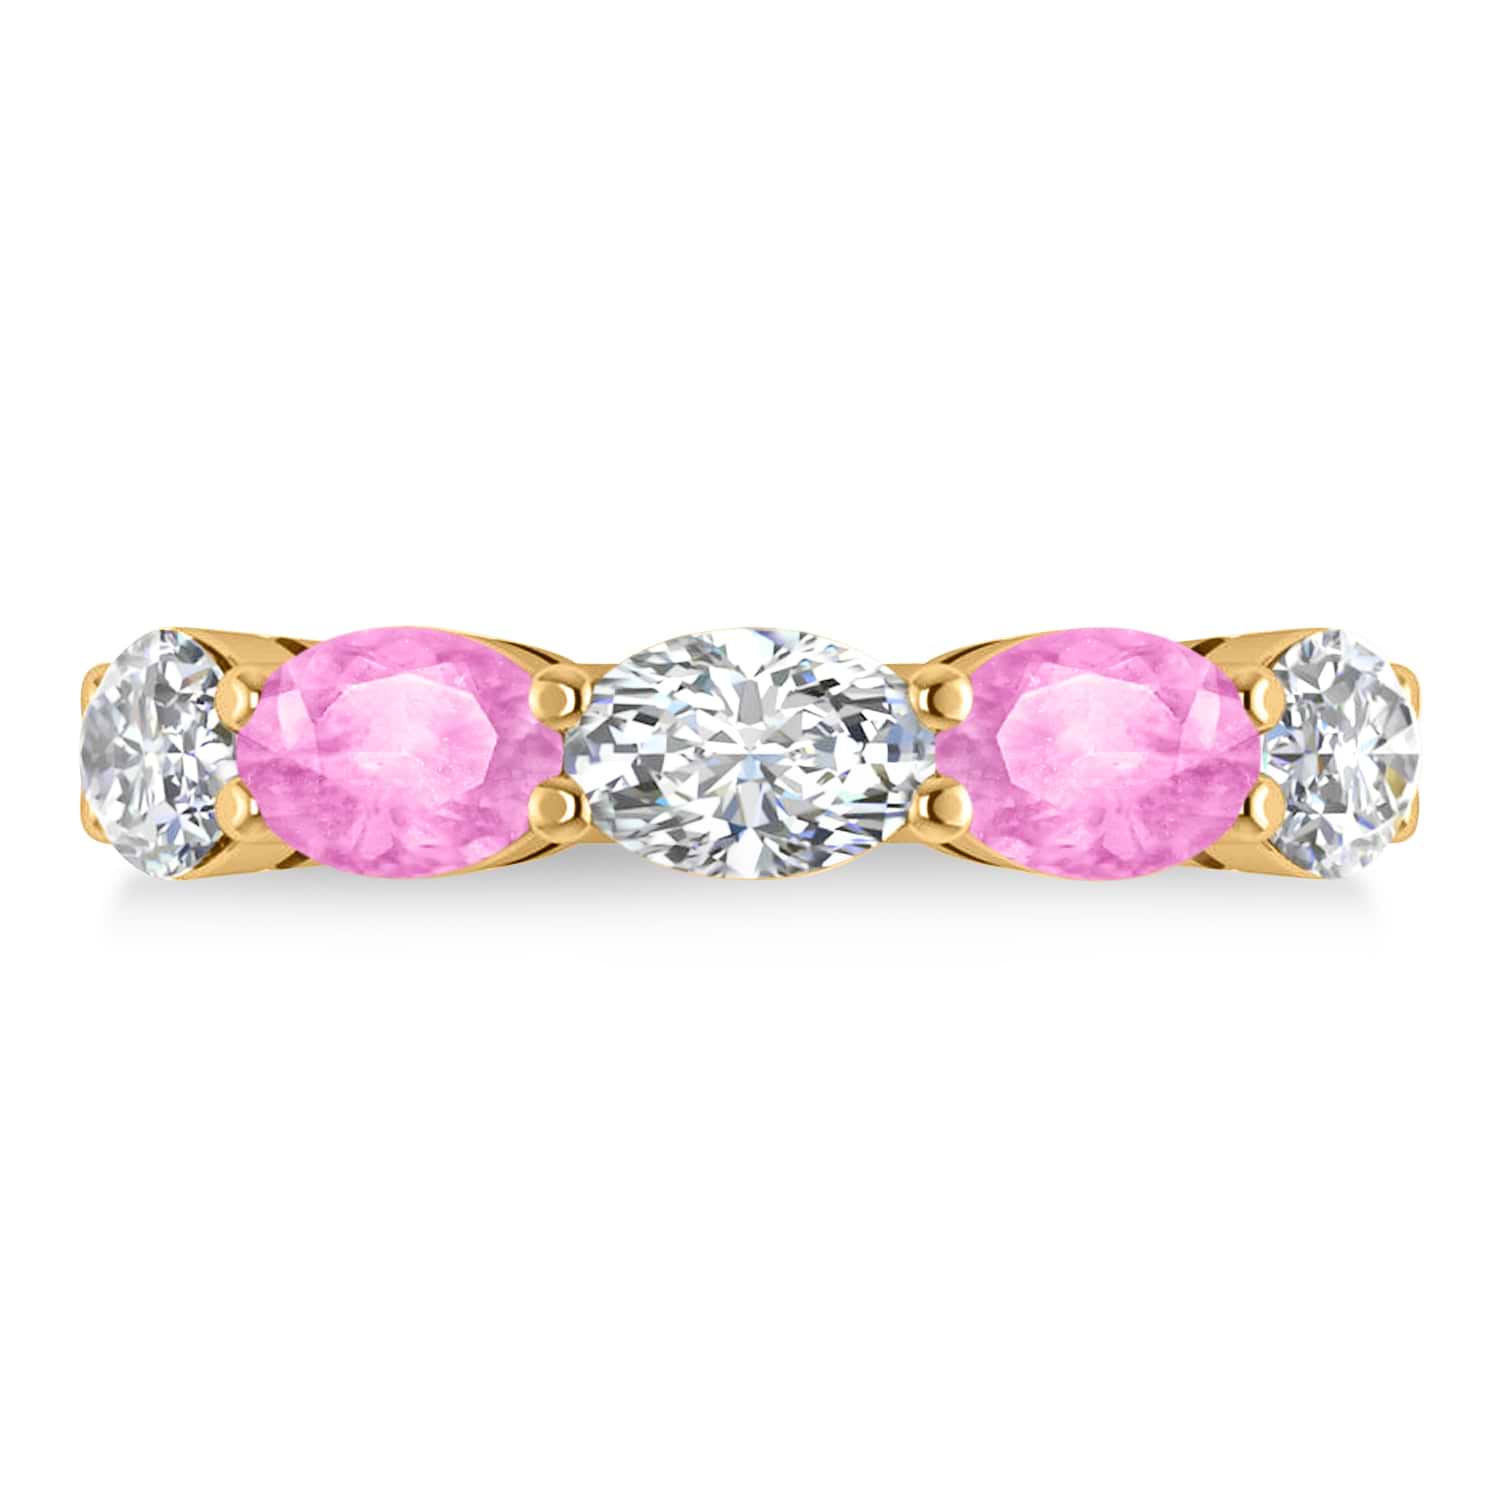 Oval Diamond & Pink Sapphire Five Stone Ring 14k Yellow Gold (5.00ct)